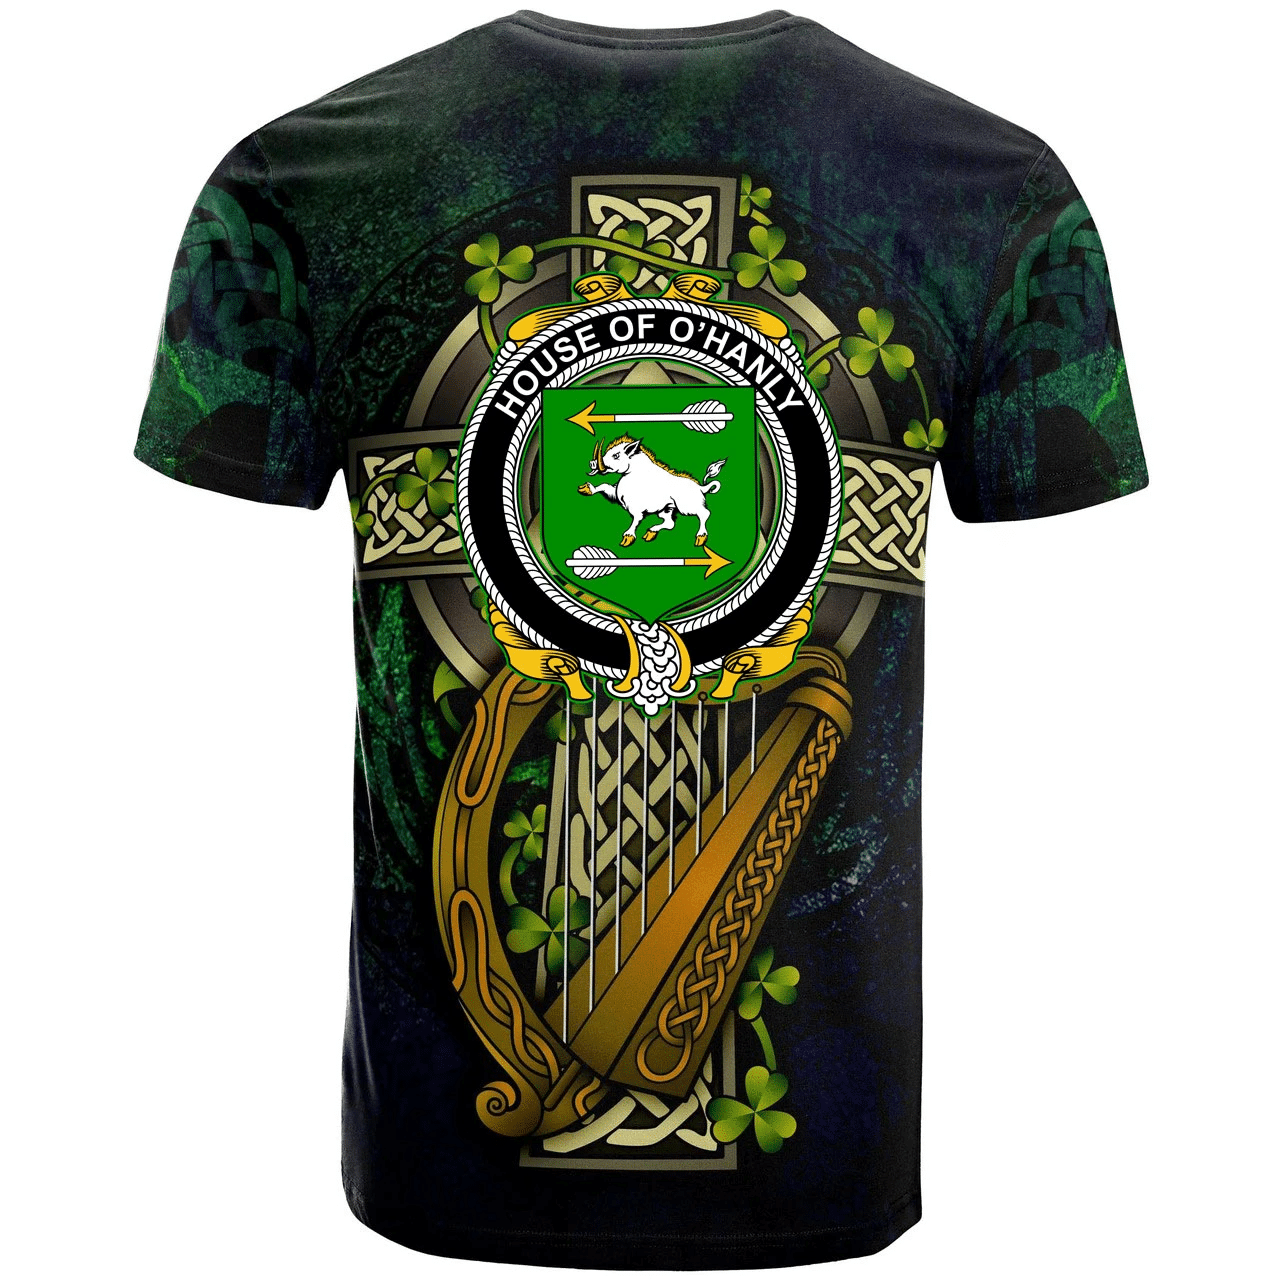 1stireland Ireland T-Shirt - House of O'HANLY Irish with Celtic Cross Tee - Irish Family Crest A7 | 1stScotland.com